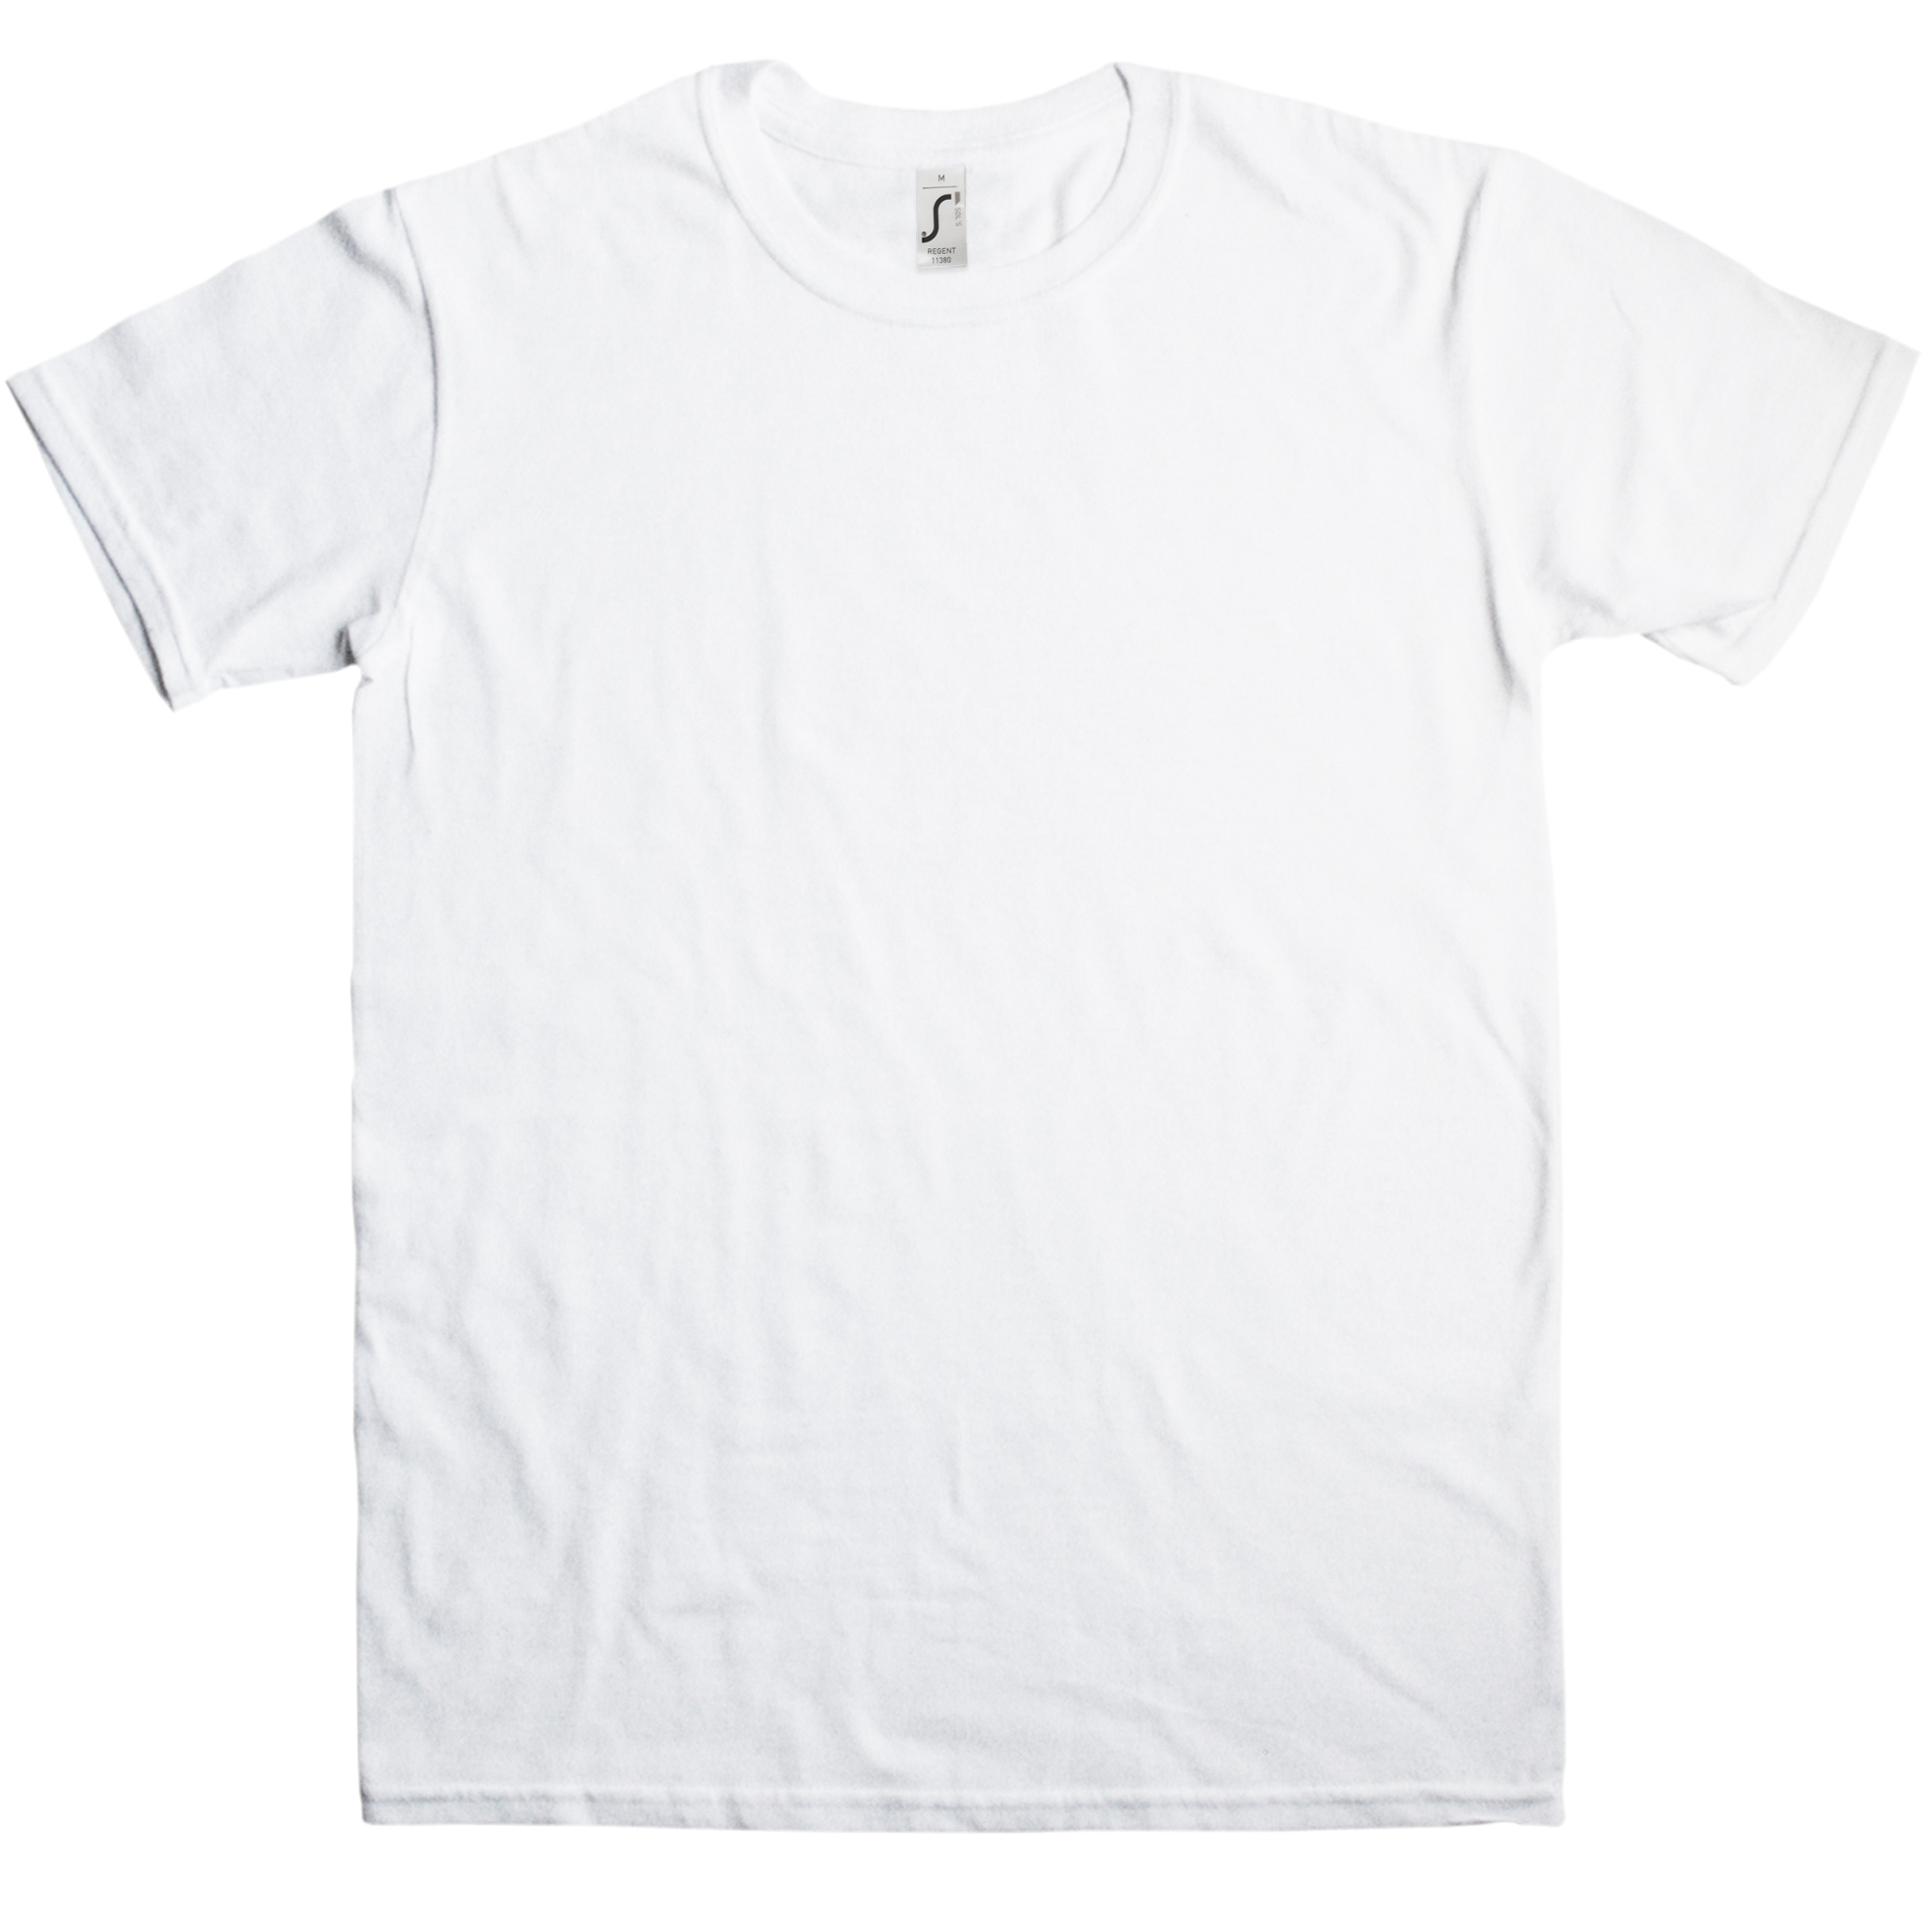 Blank White Tee Shirt